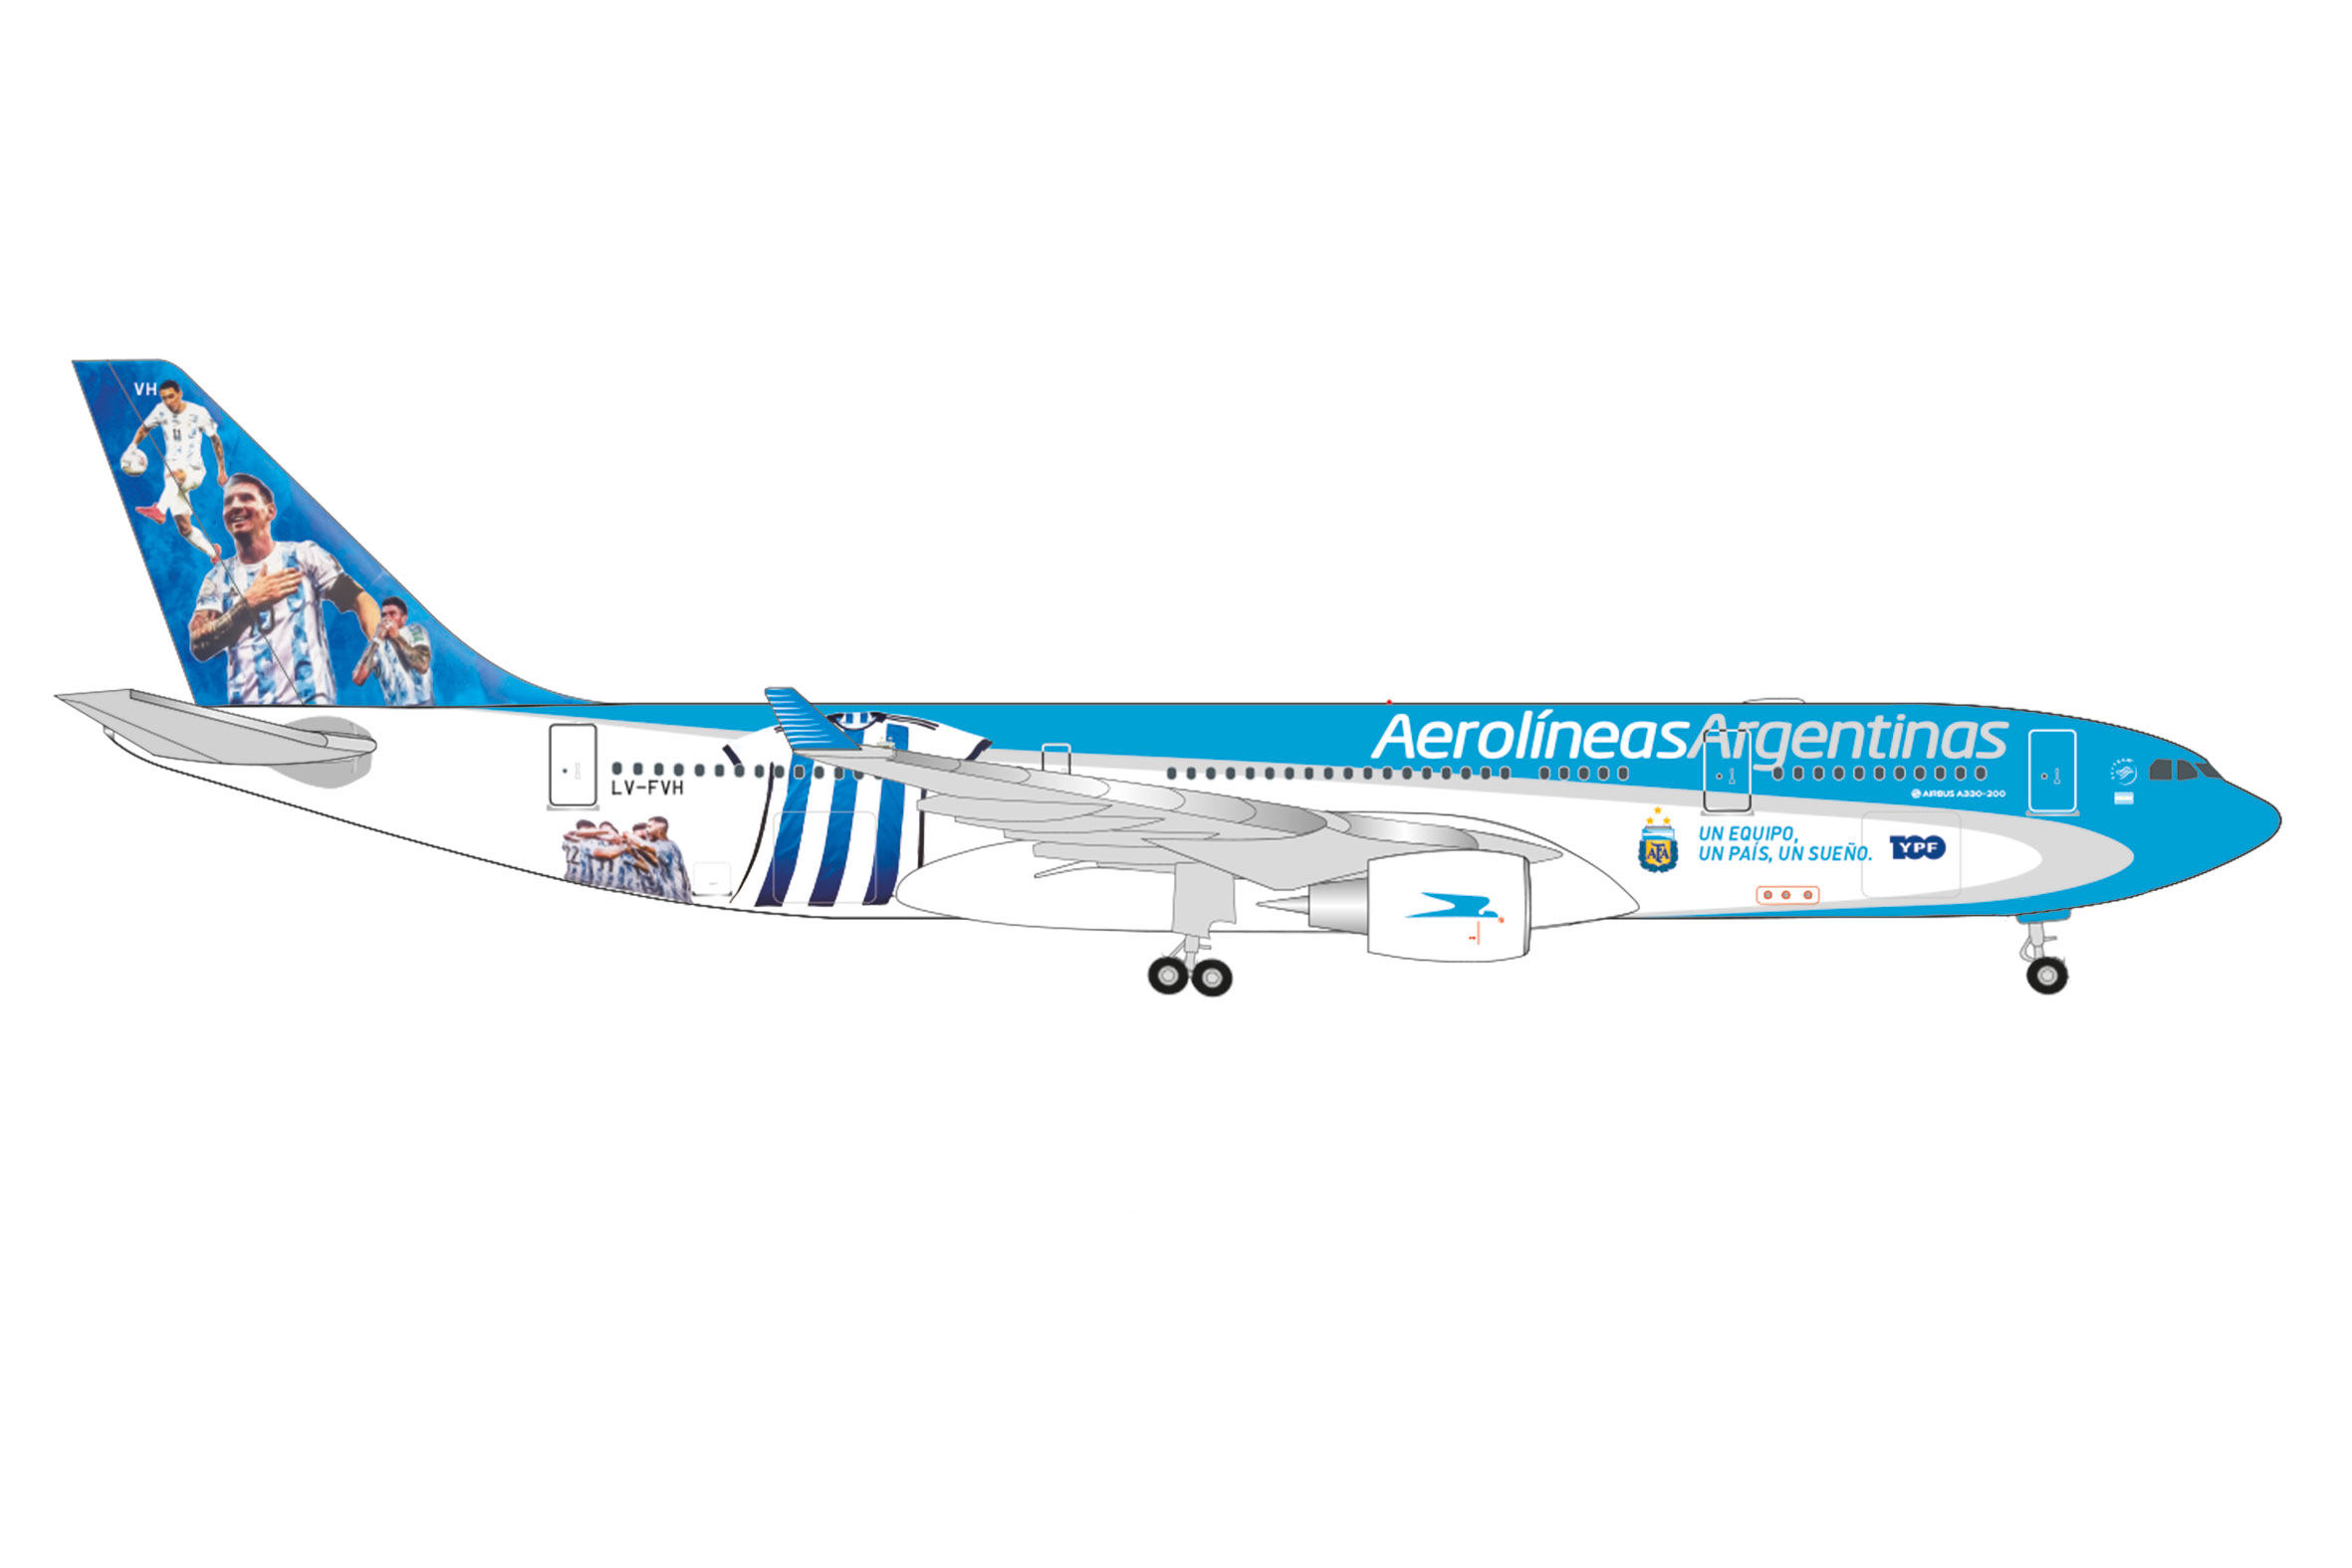 Aerolíneas Argentinas Airbus A330-200 - Selección de Argentina - Reg.: LV-FVH